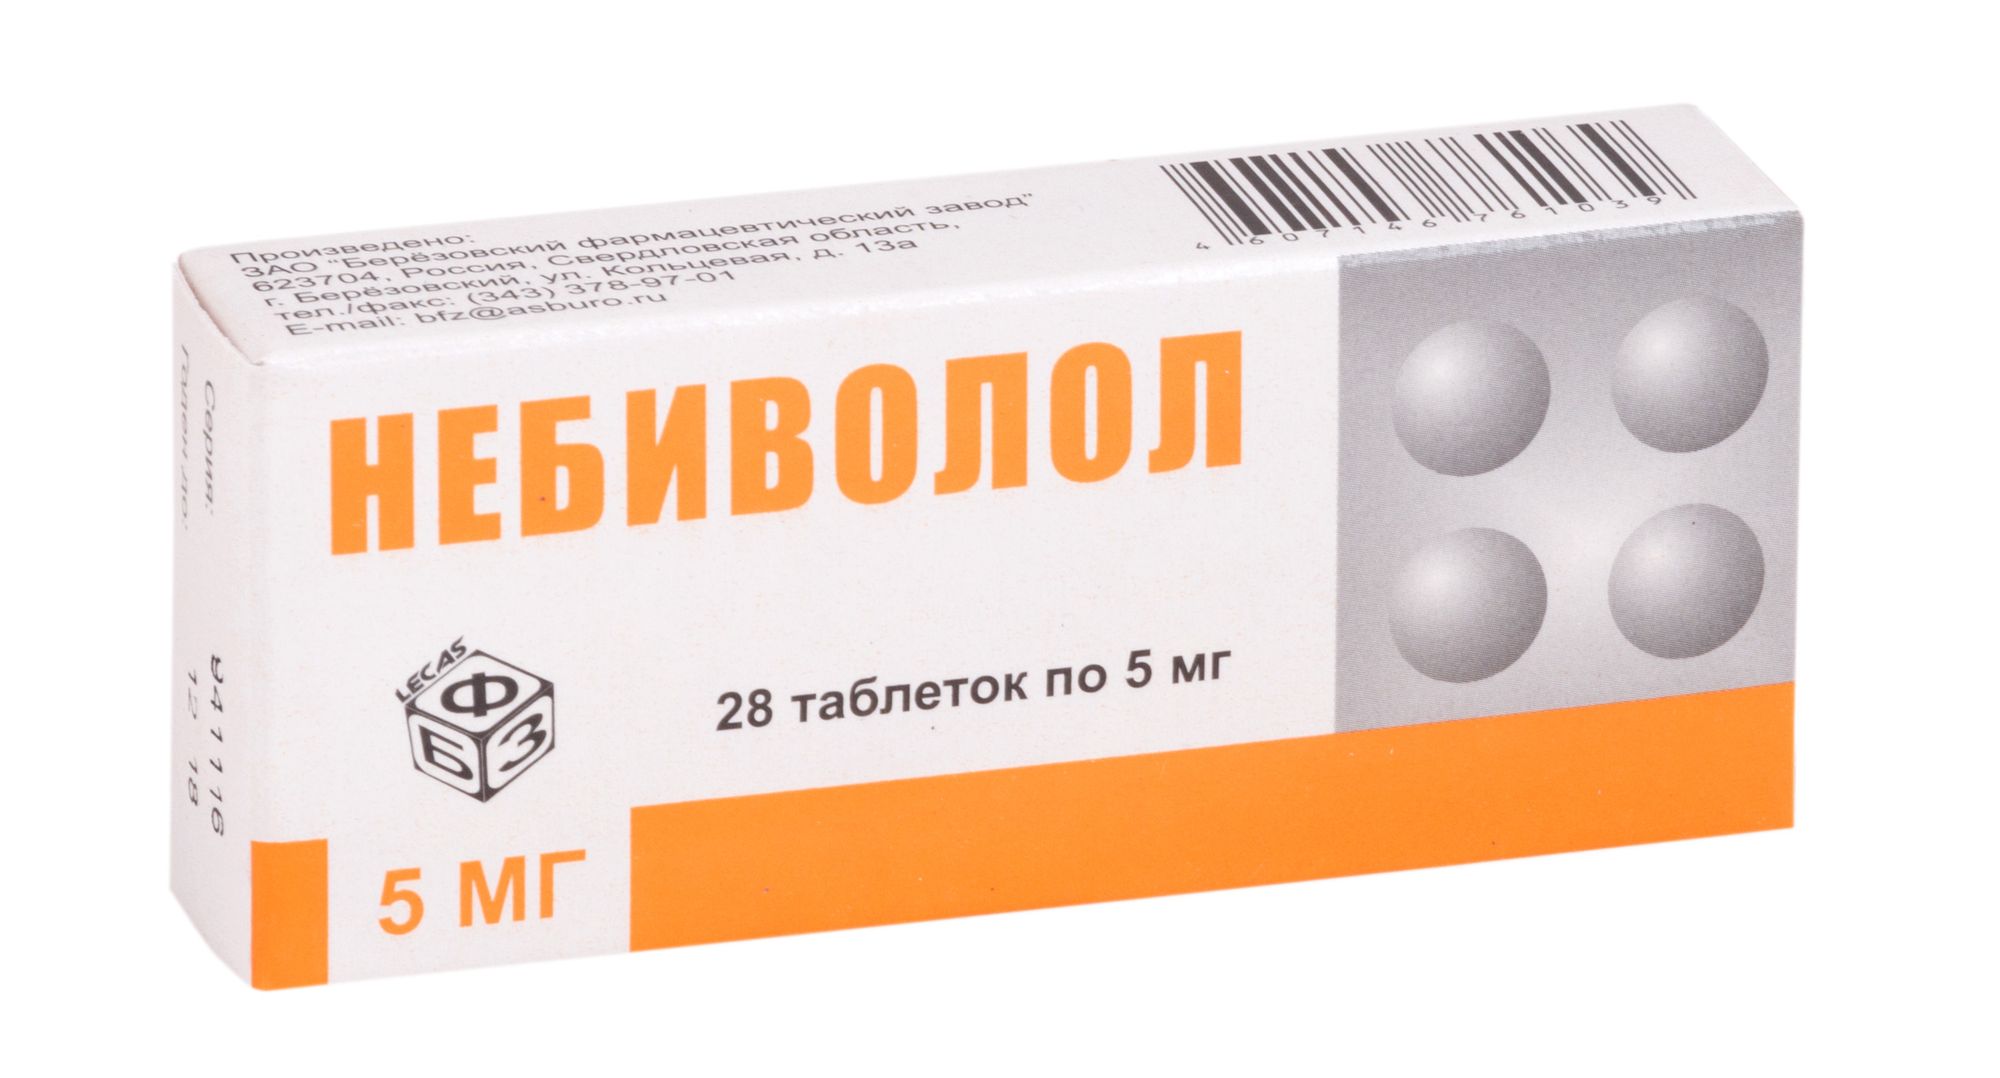 Небиволол, 5 мг, таблетки, 28 шт., Березовский фармацевтический завод .